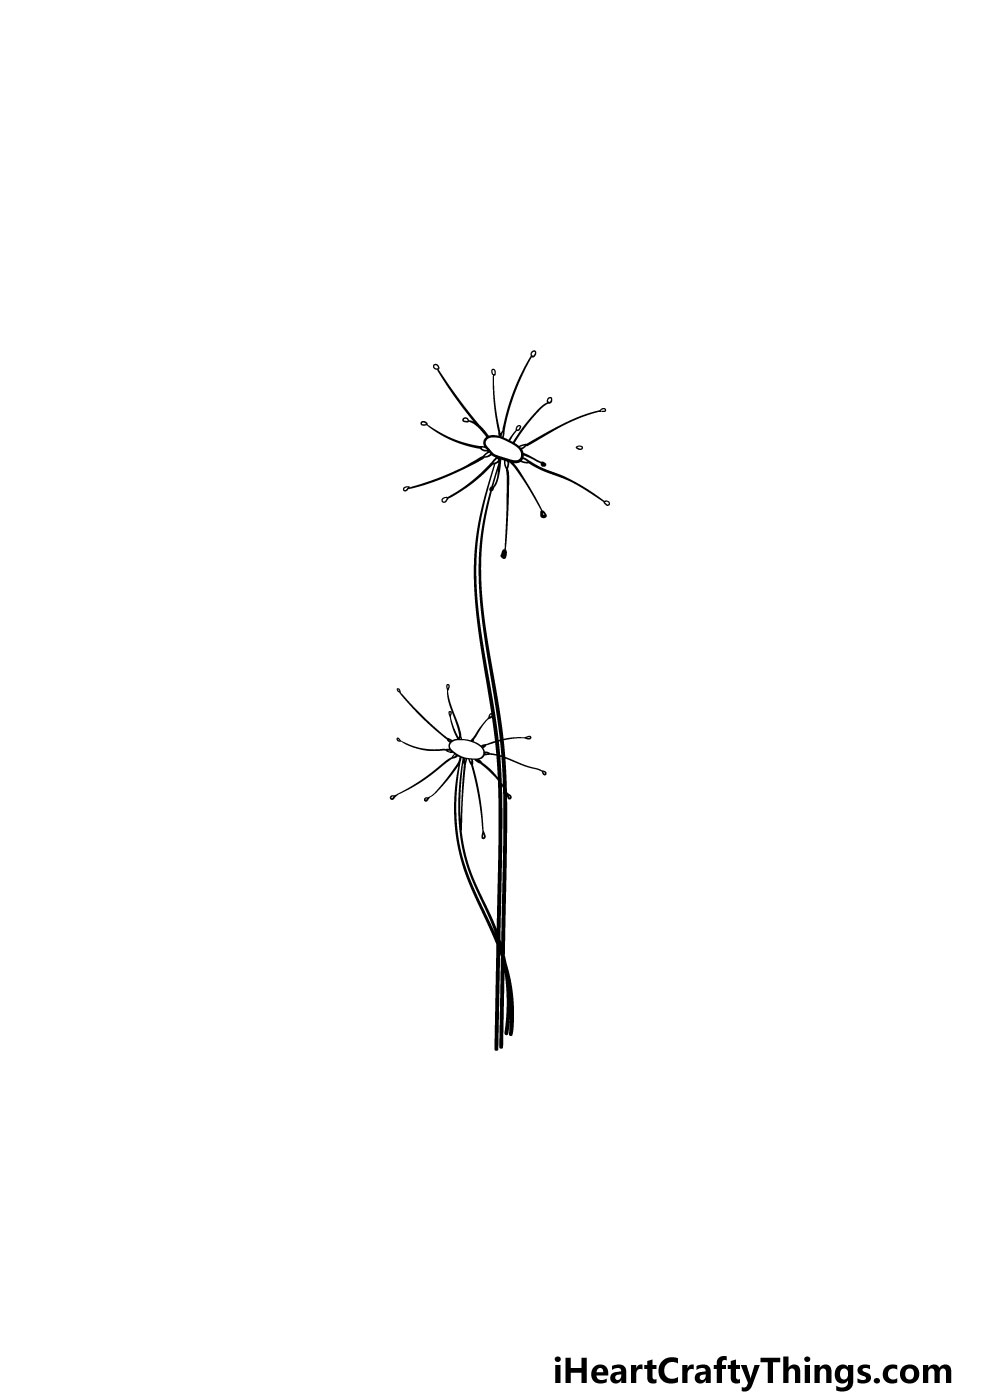 drawing a dandelion step 2